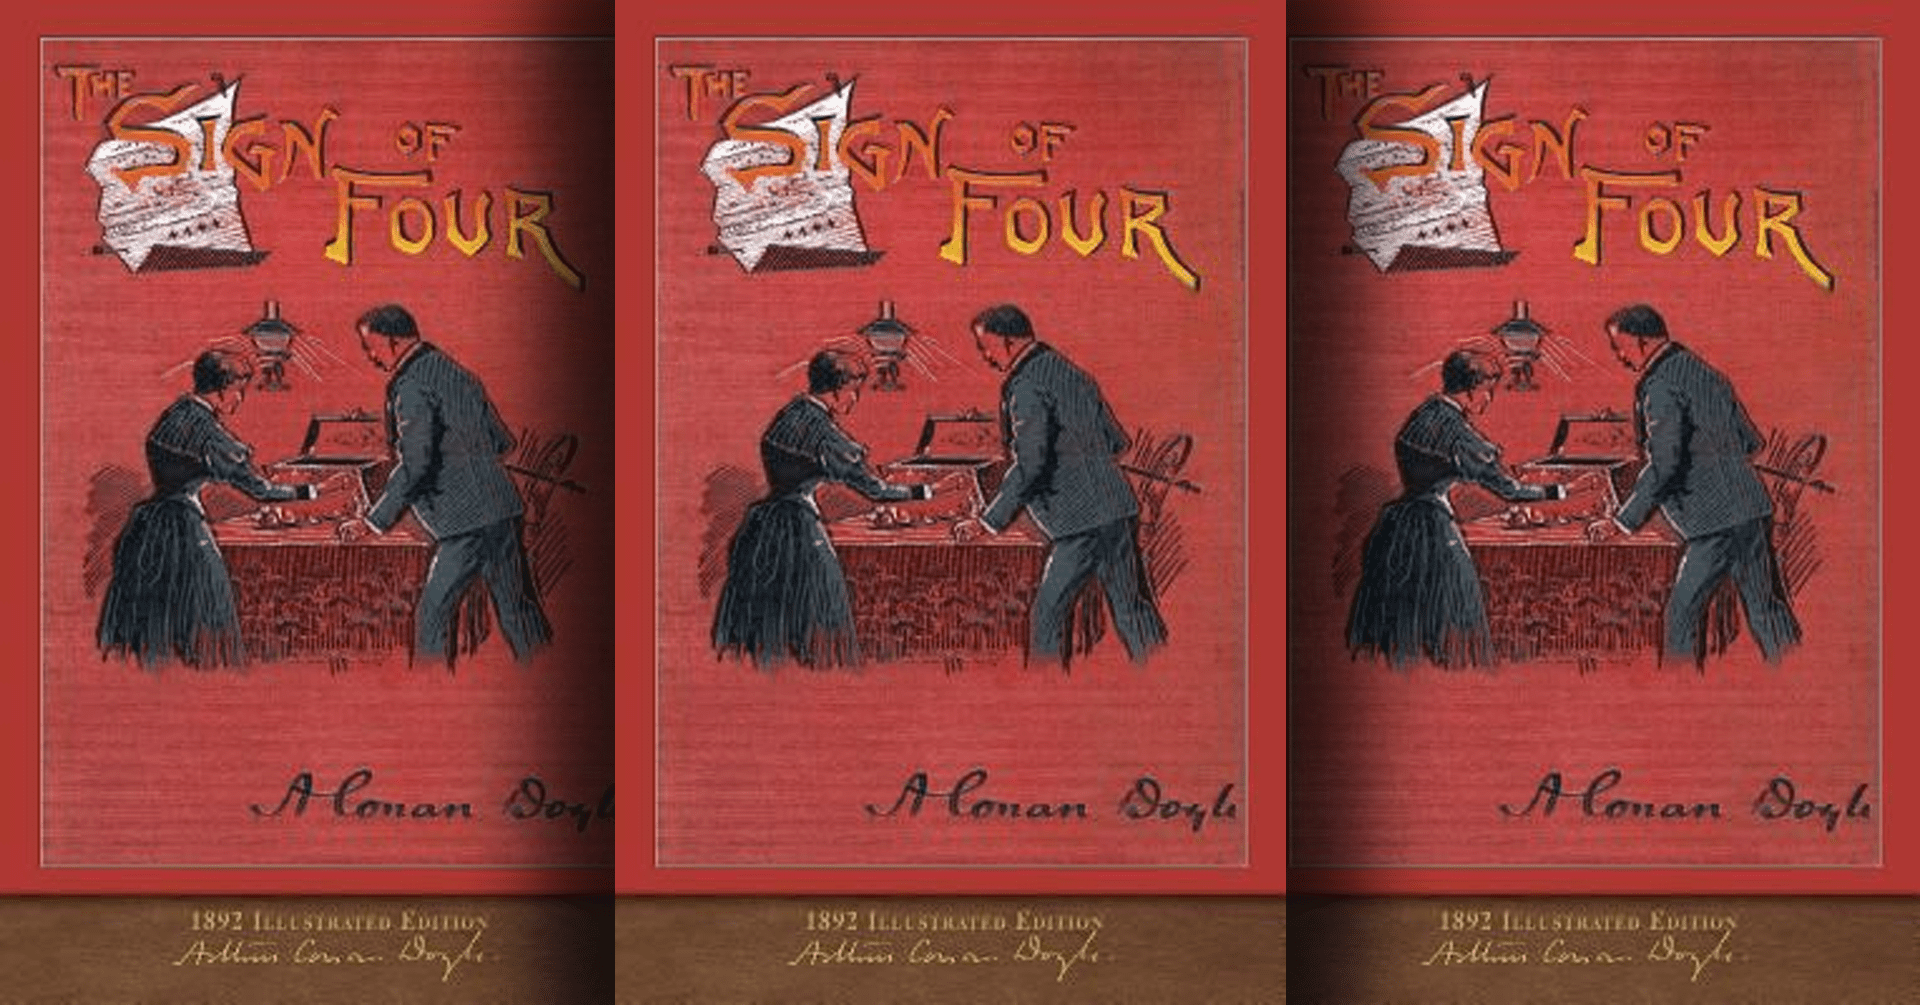 Book Cover: The Sign of Four by Arthur Conan Doyle